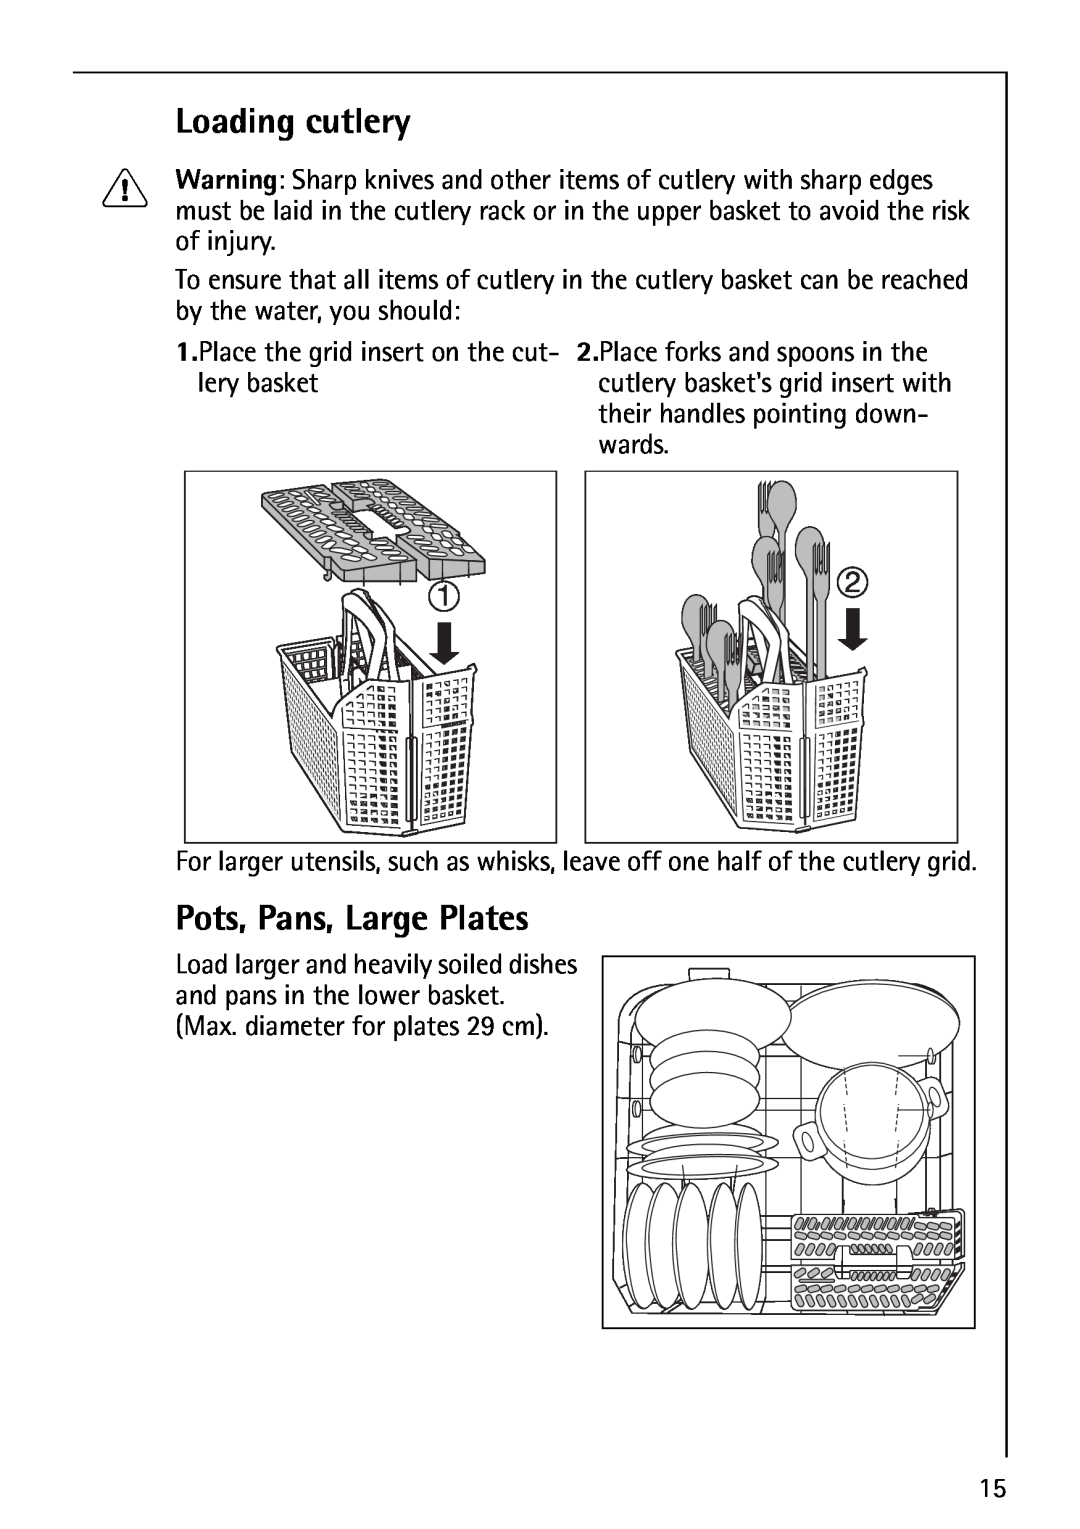 AEG 40850 manual Loading cutlery, Pots, Pans, Large Plates 